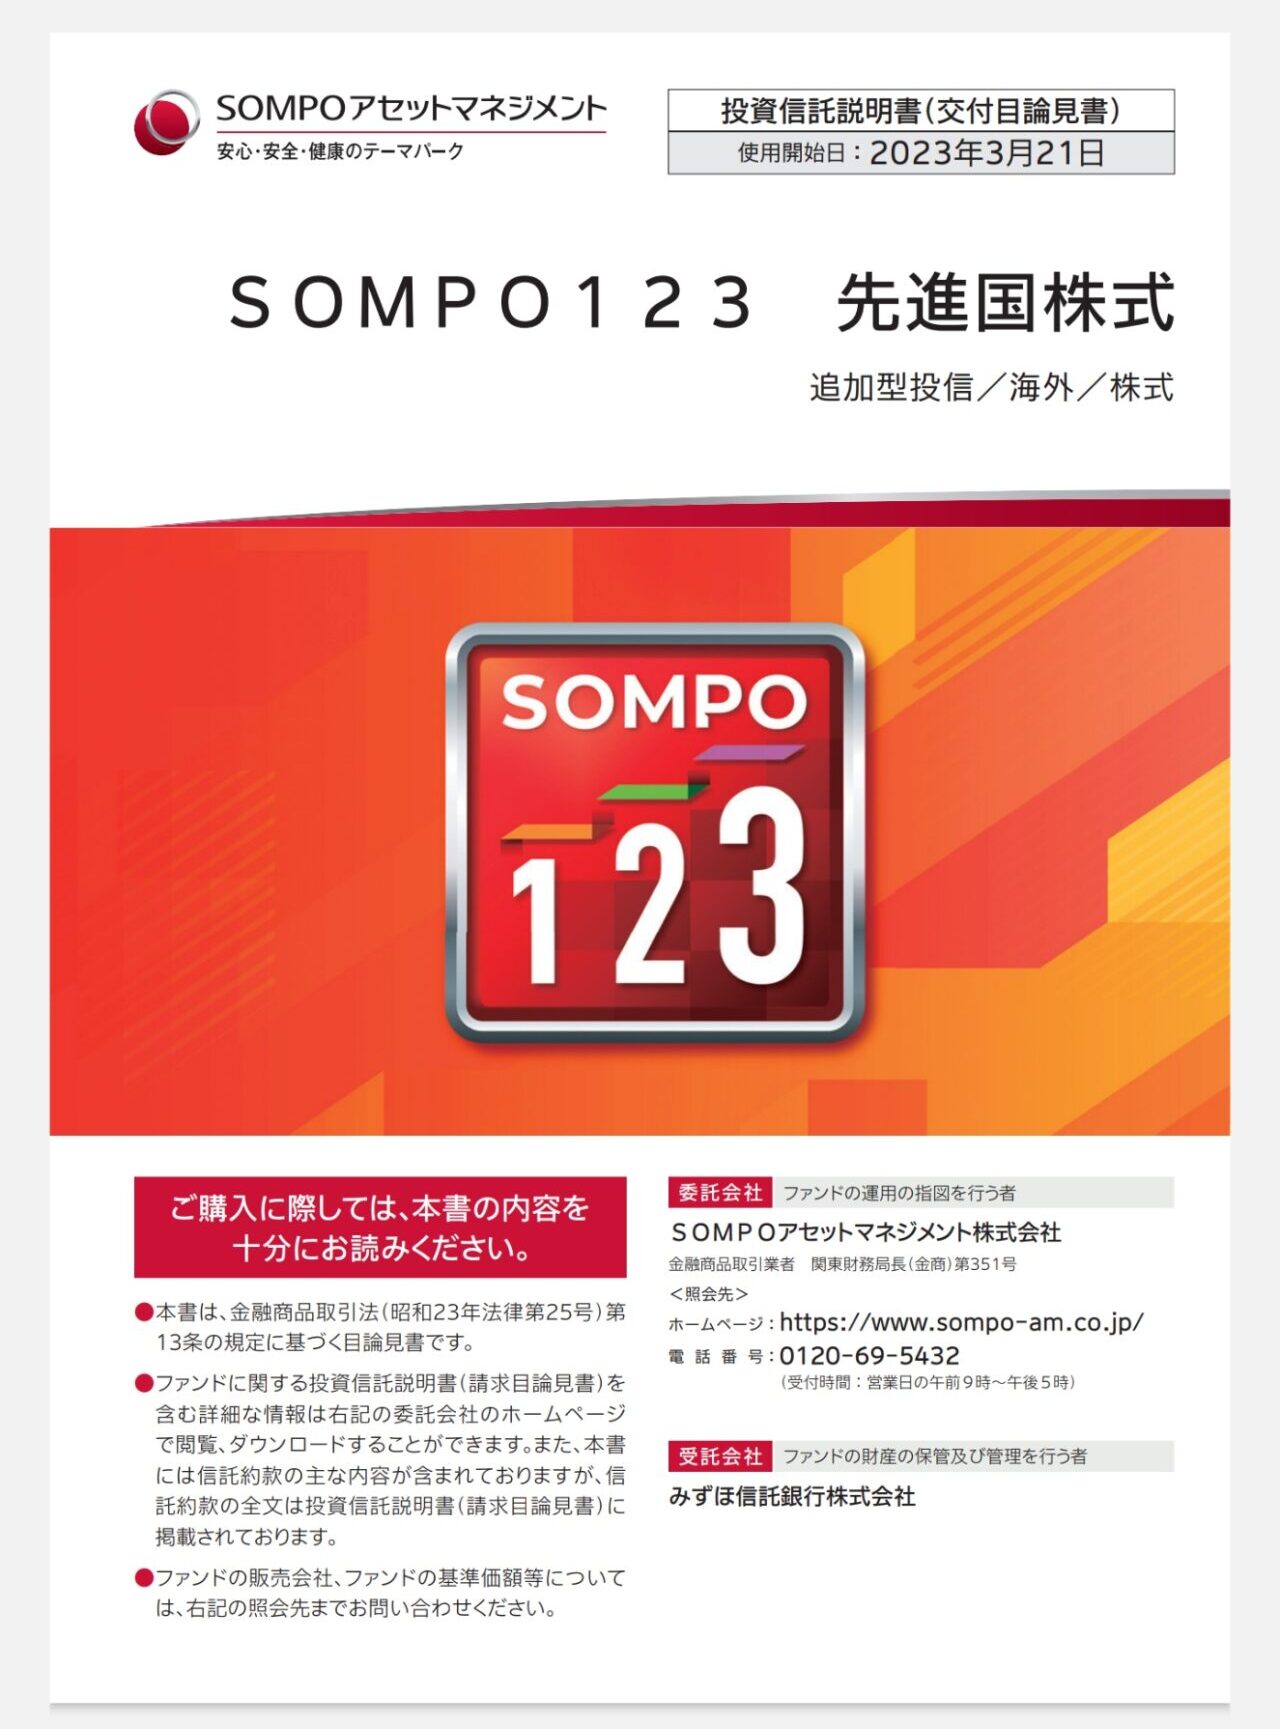 SOMPO123